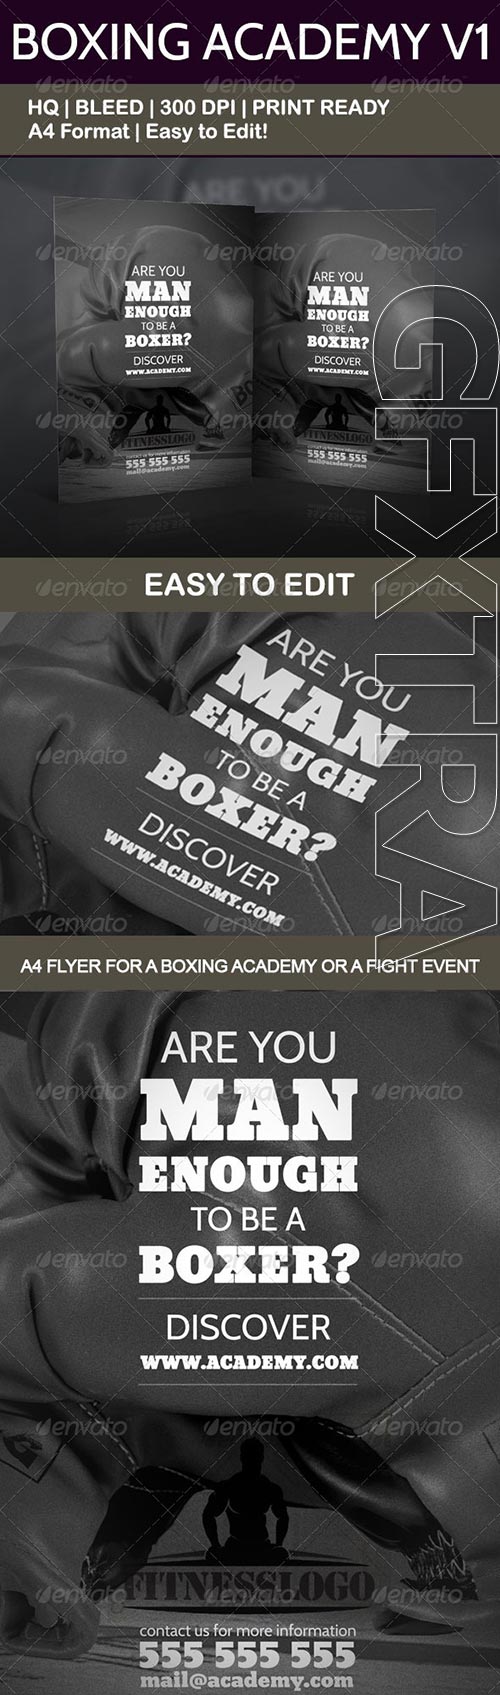 Graphicriver - Boxing Academy Flyer V1